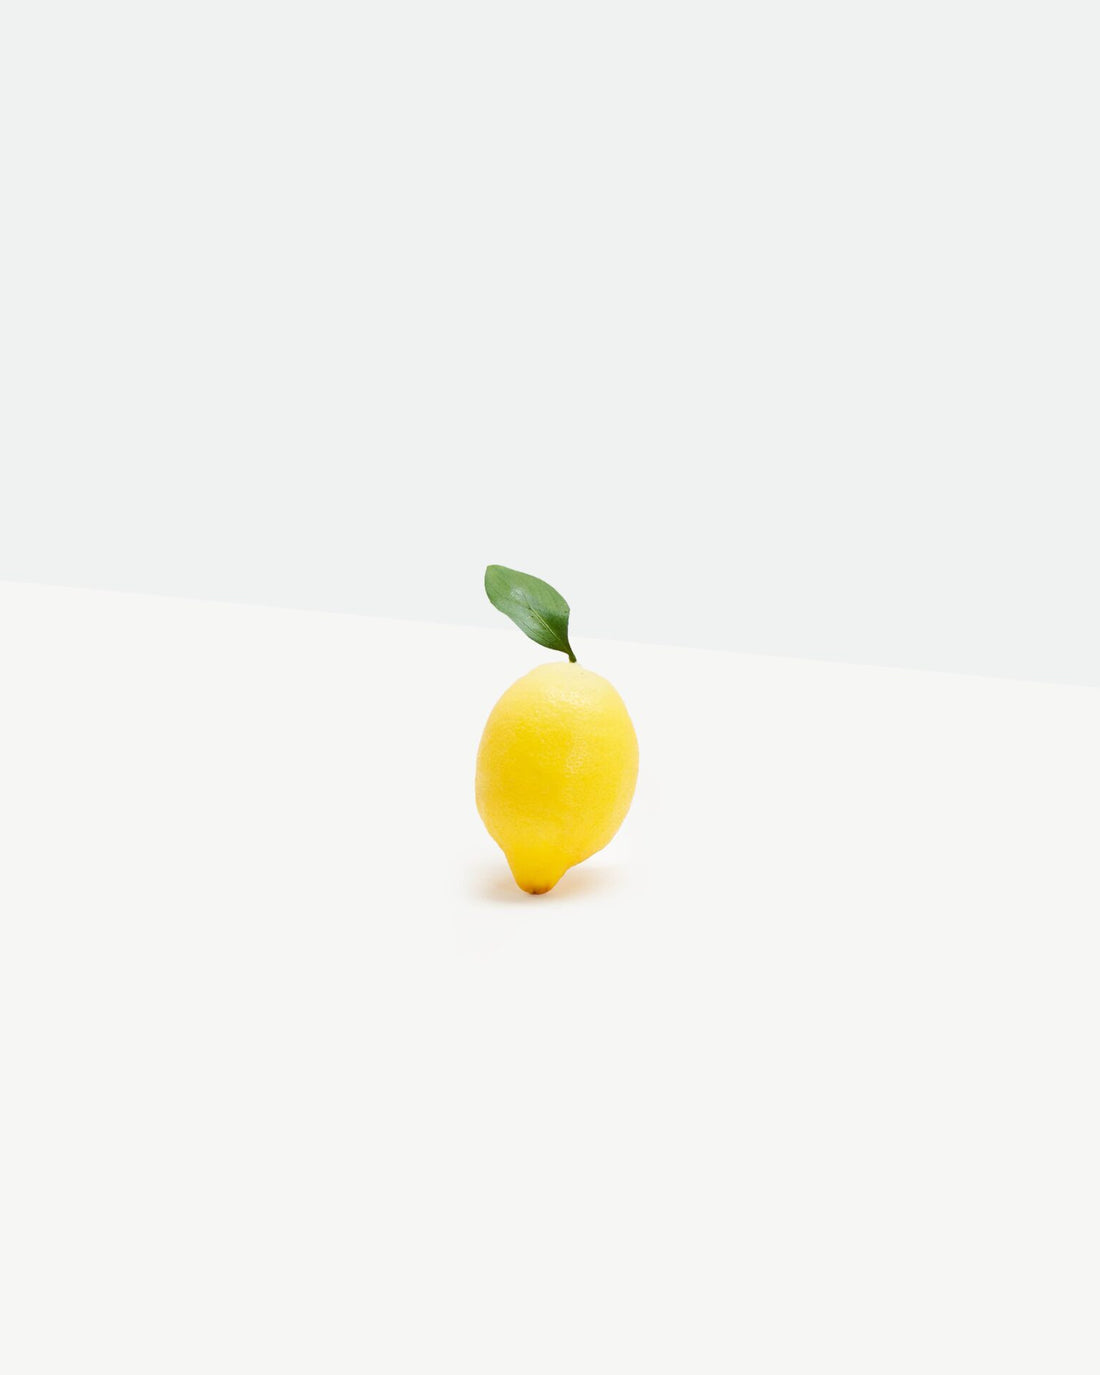 3 Simple Two-Ingredient Recipes Using Lemons